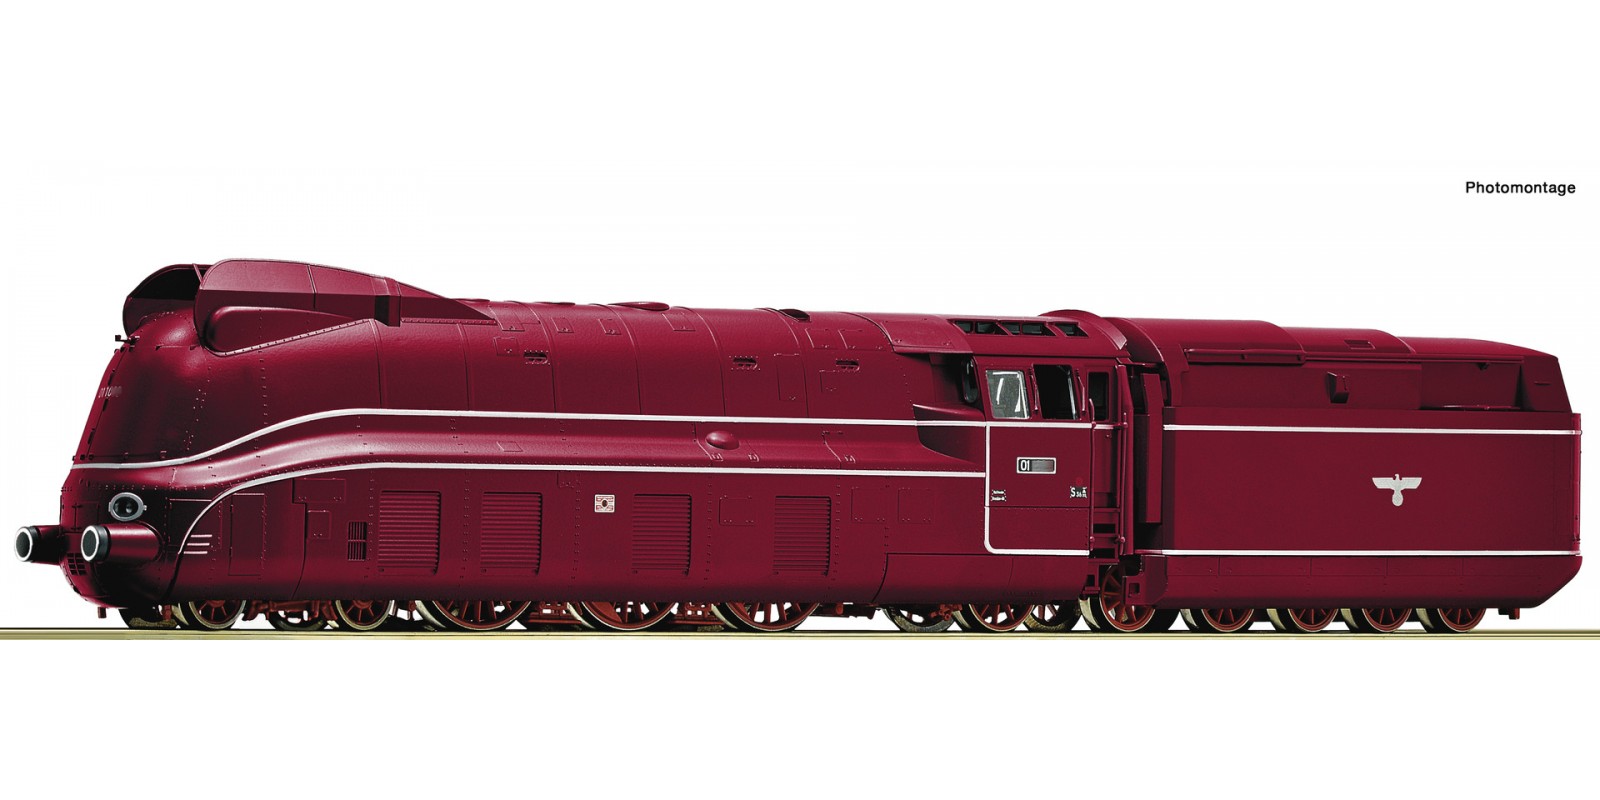 RO71204 Steam locomotive class 01.10